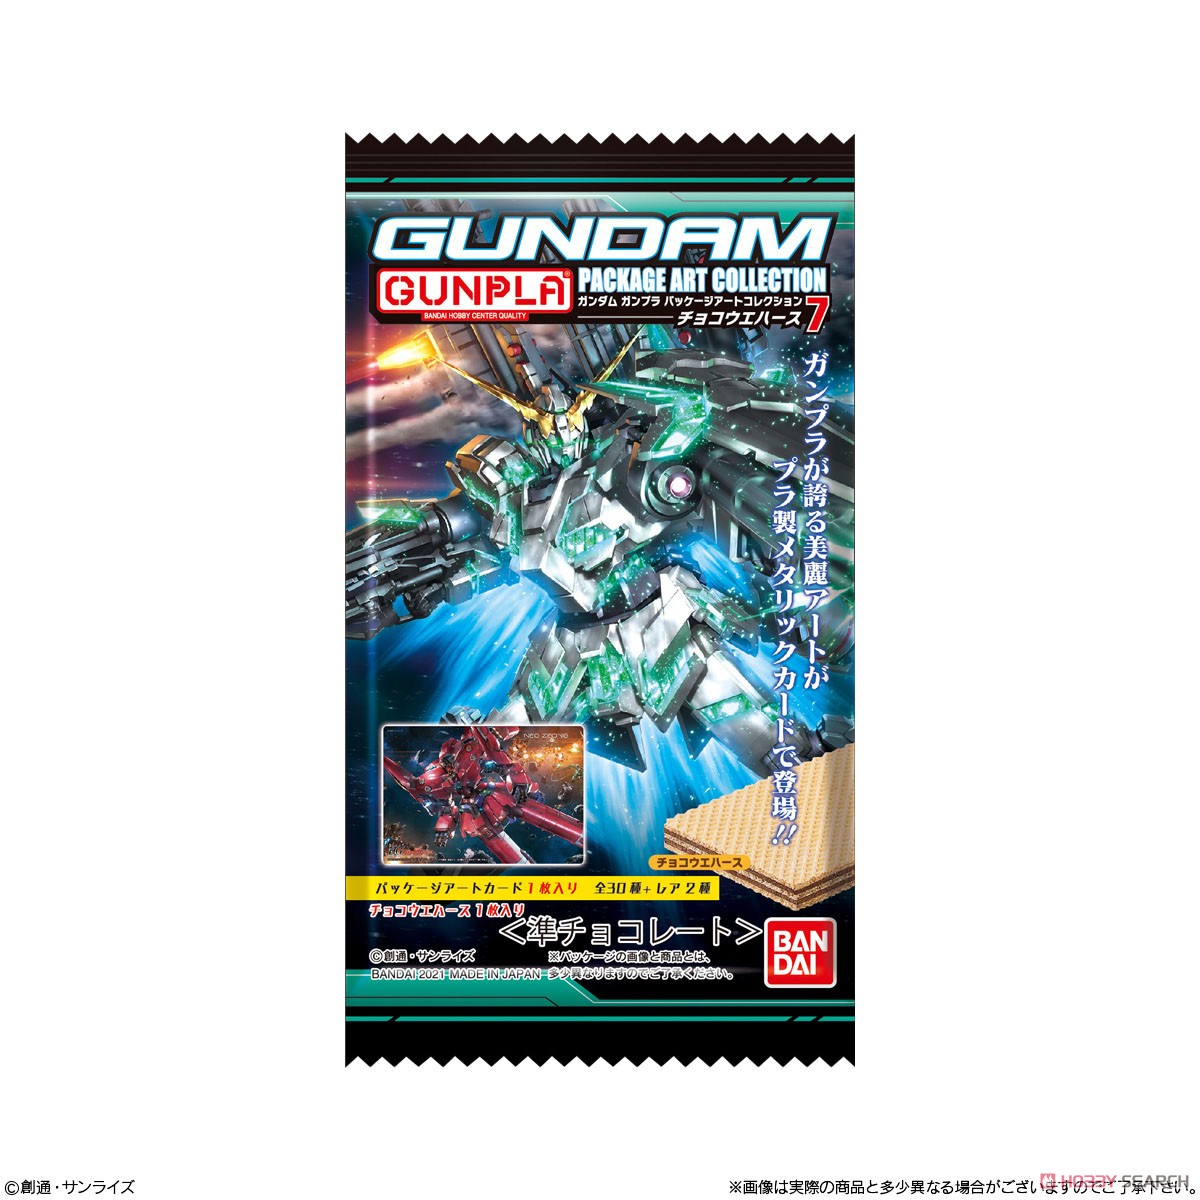 Gundam Gunpla Package Art Collection Chocolate Wafer 7 (Set of 20) (Shokugan) Package1